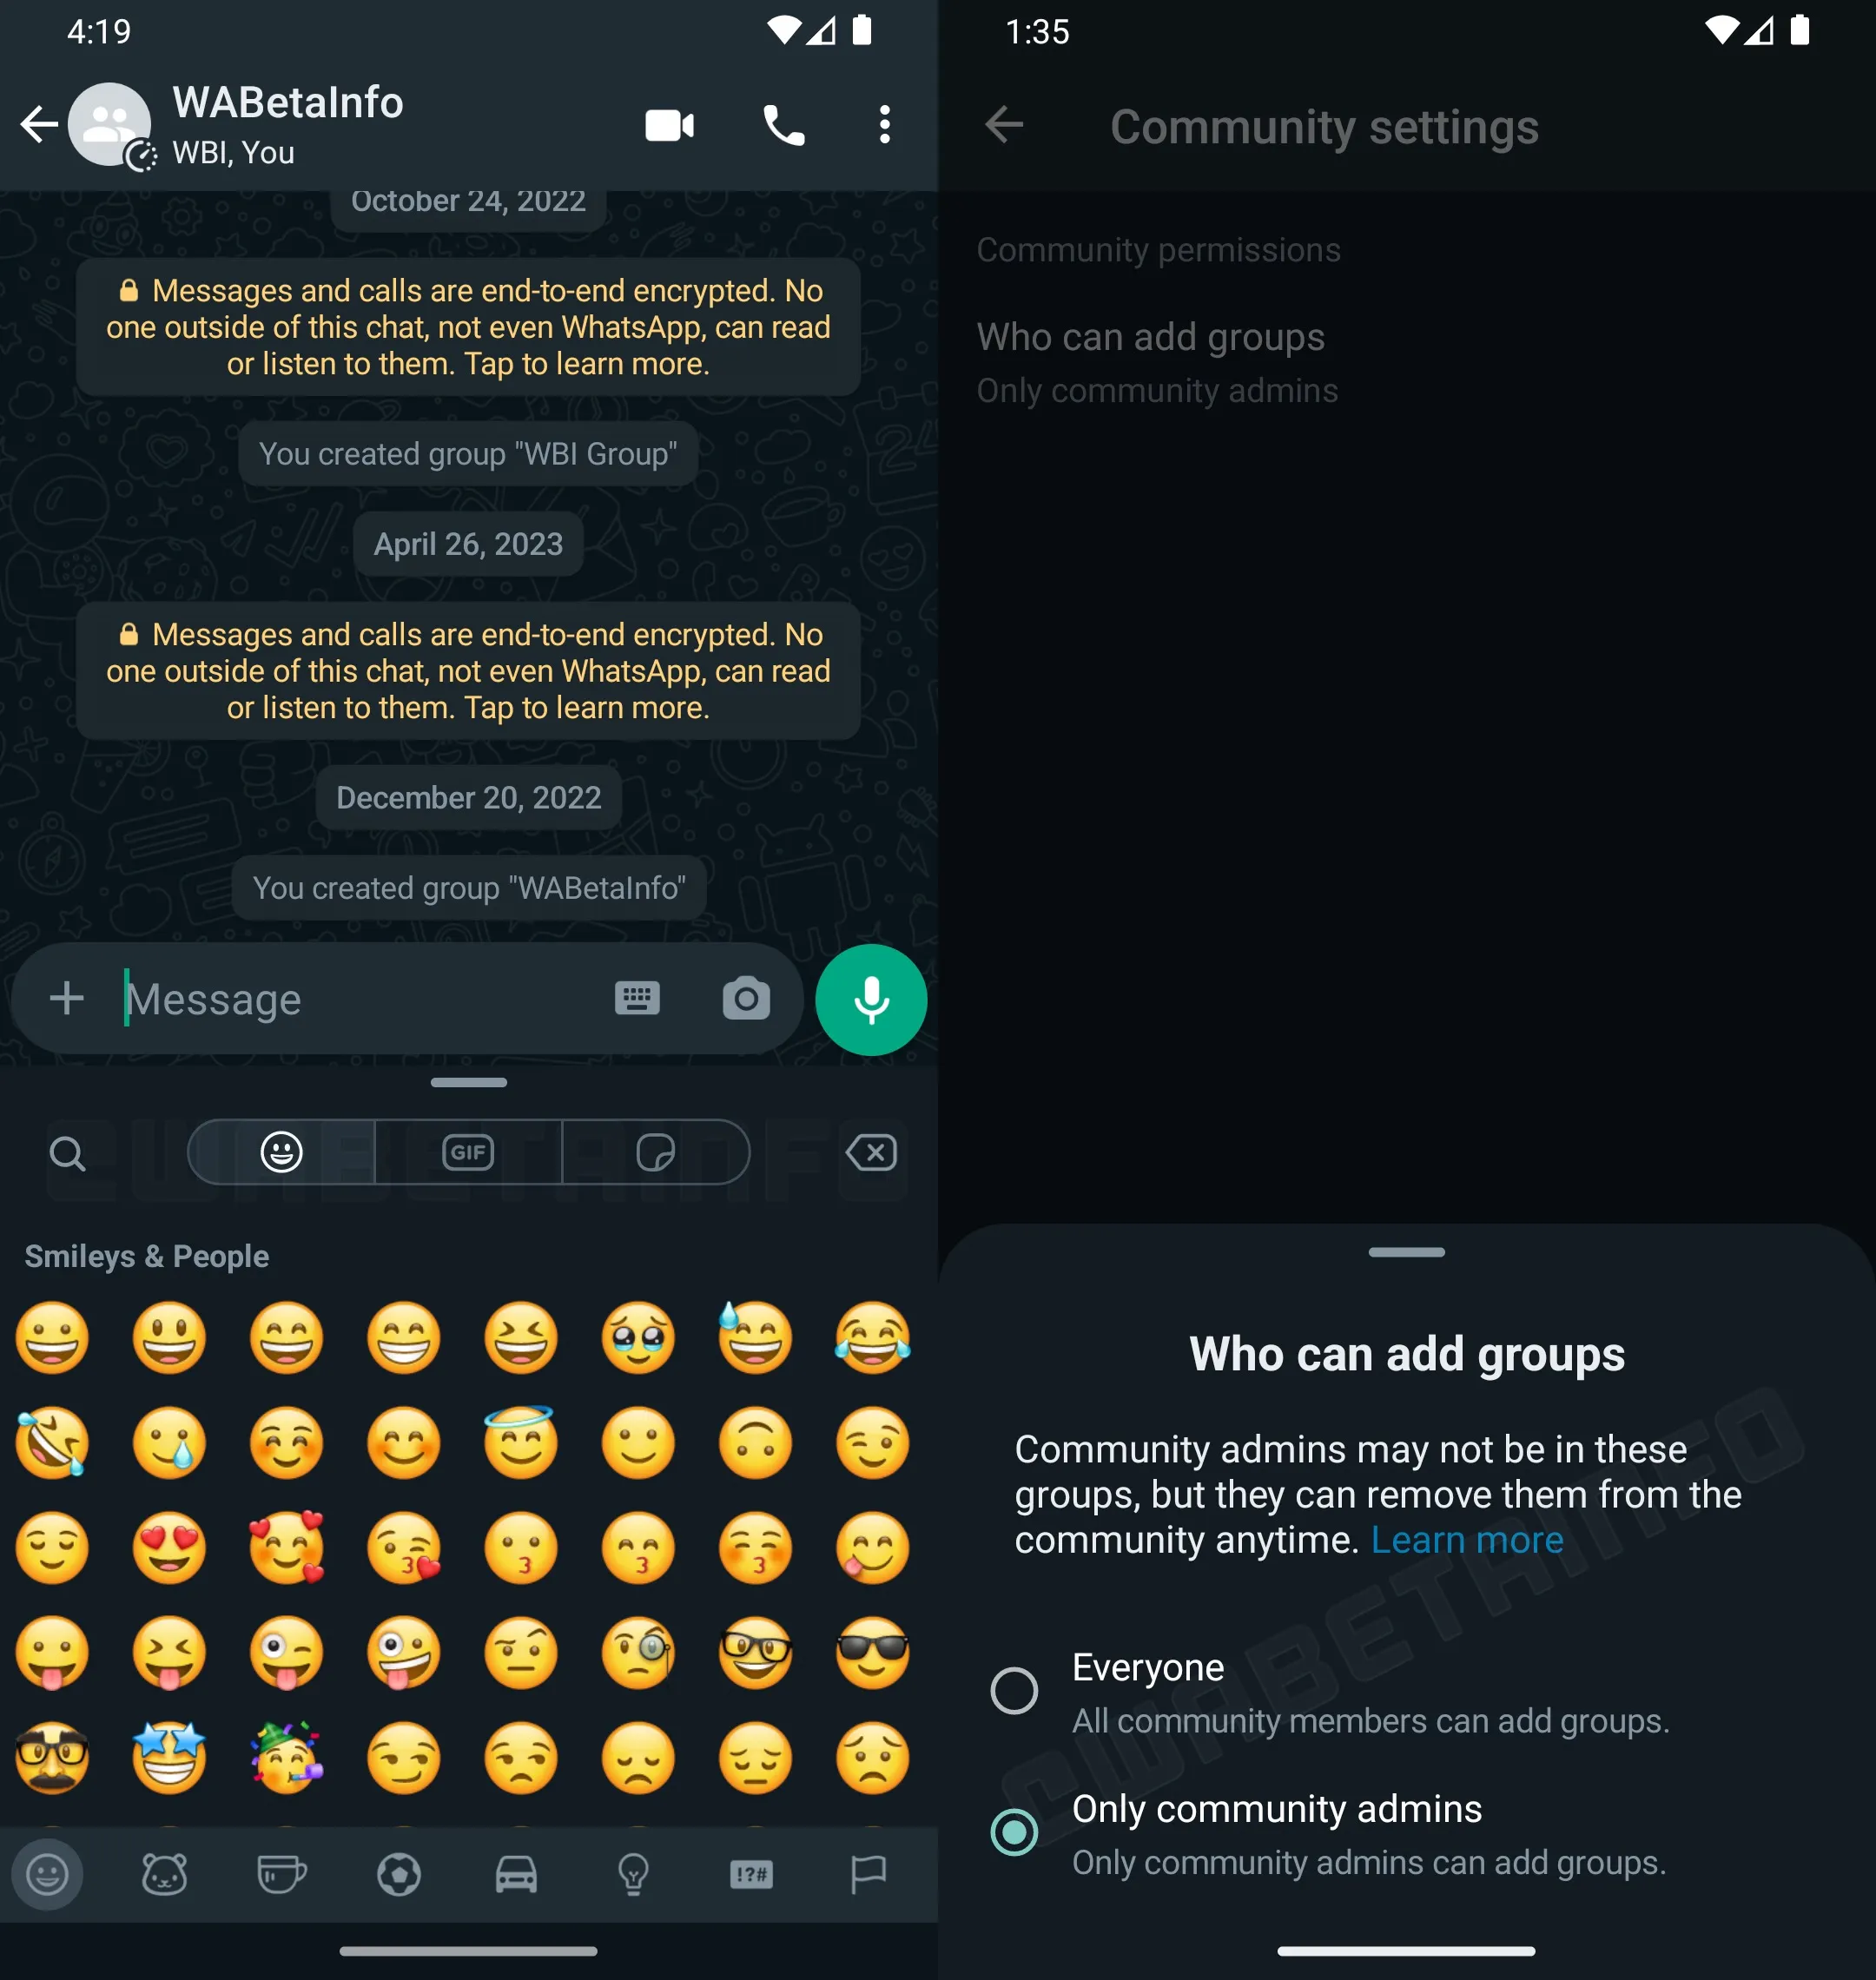 whatsapp redesigned emoji keyboard community settings beta